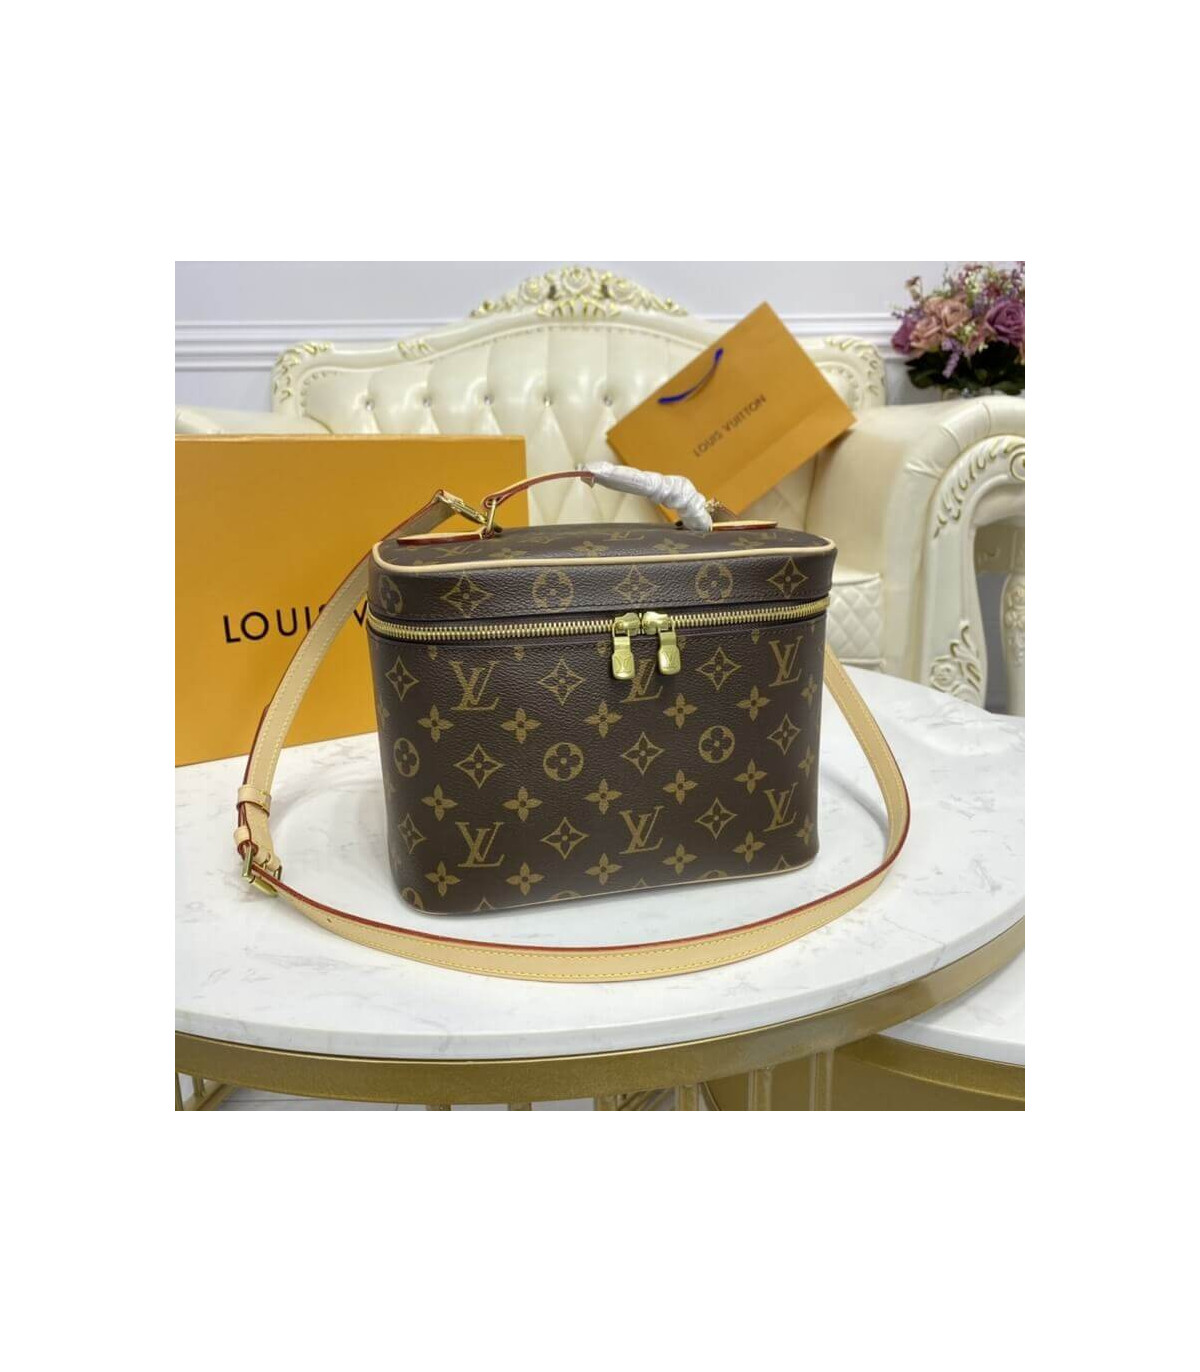 Louis Vuitton Nice BB Toiletry Bag Vanity Case in Monogram - SOLD